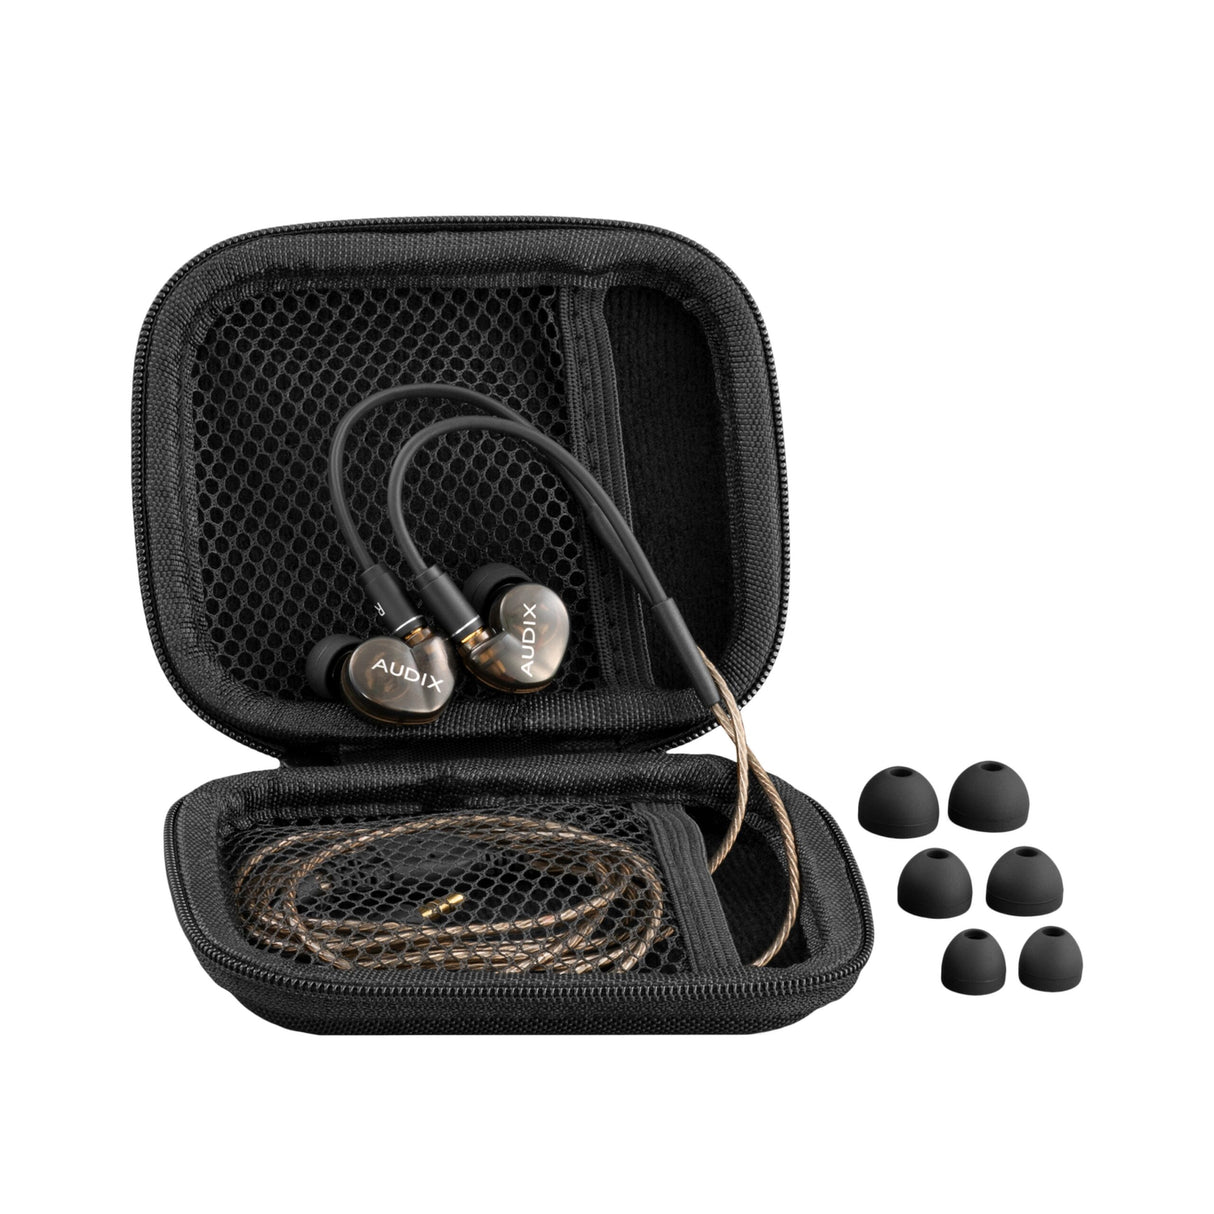 Audix A10 Studio-Quality Performance Earphones